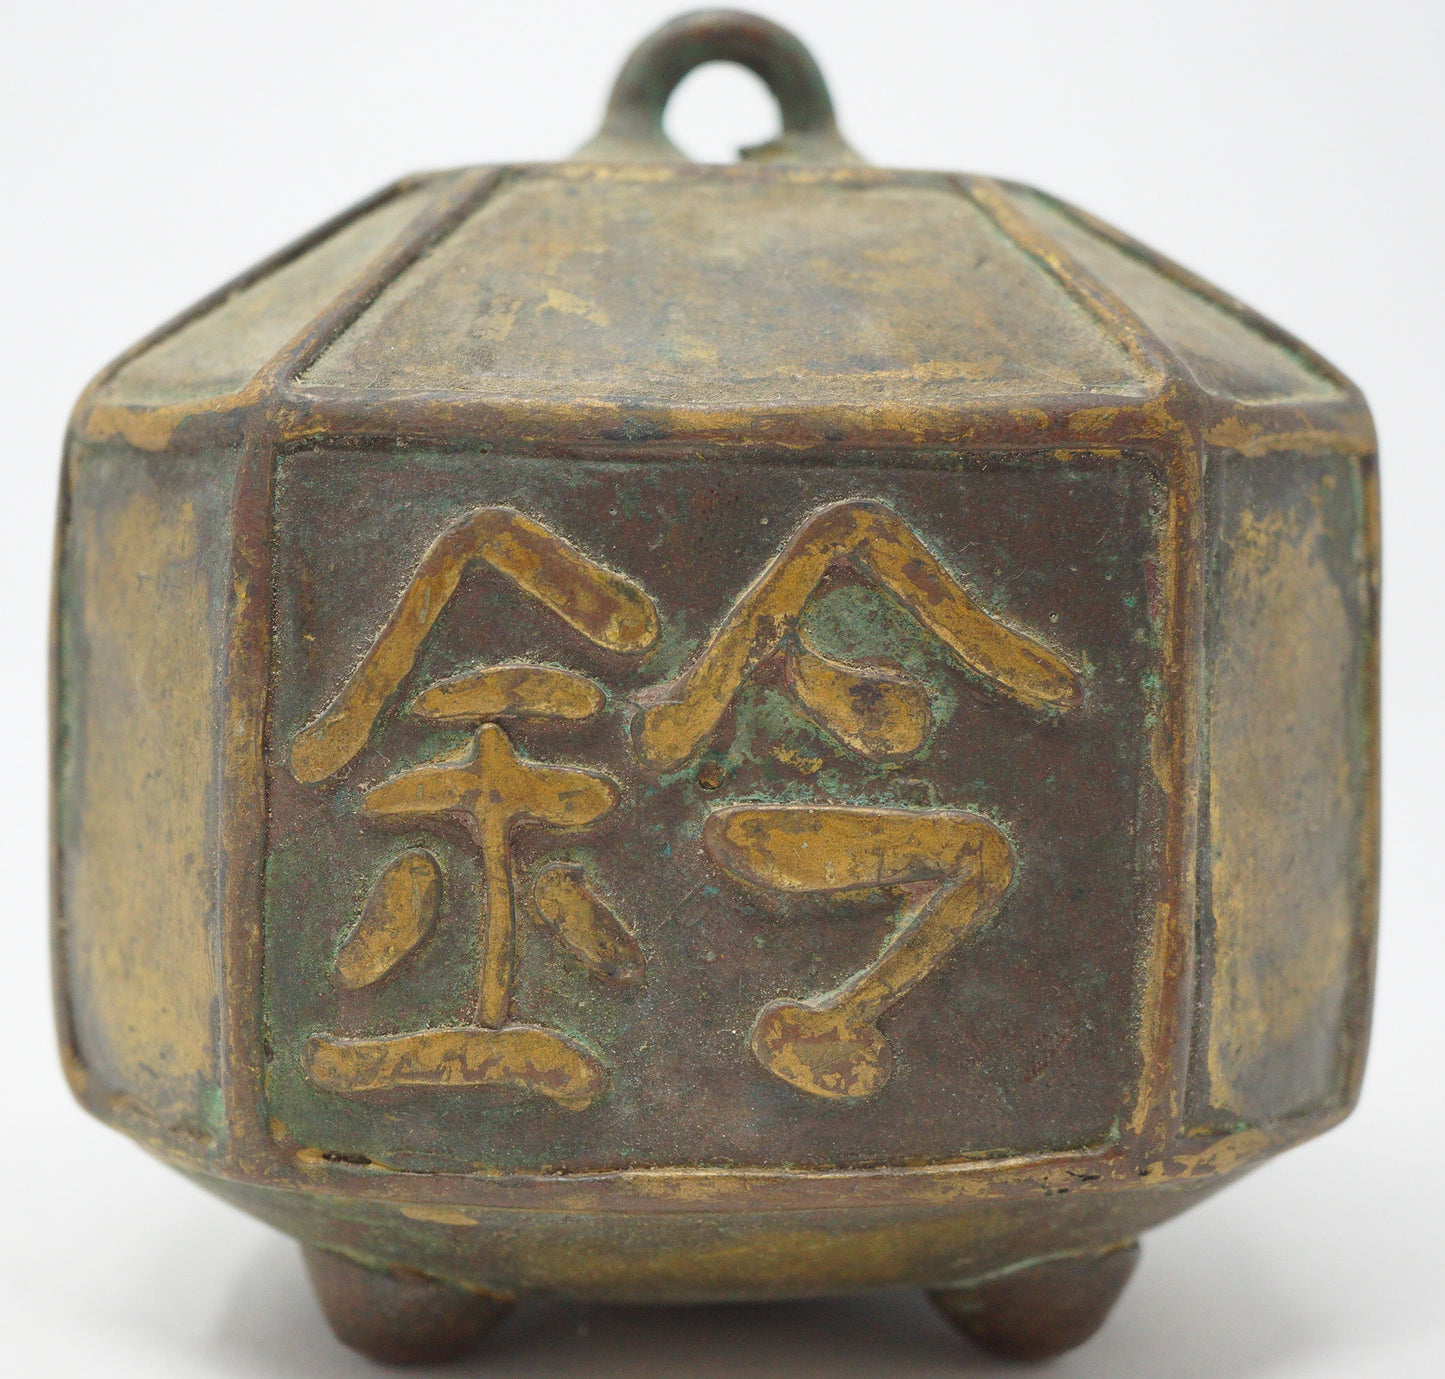 Japnese Tea Ceremony Bell Antique Original from Japan 0914D8